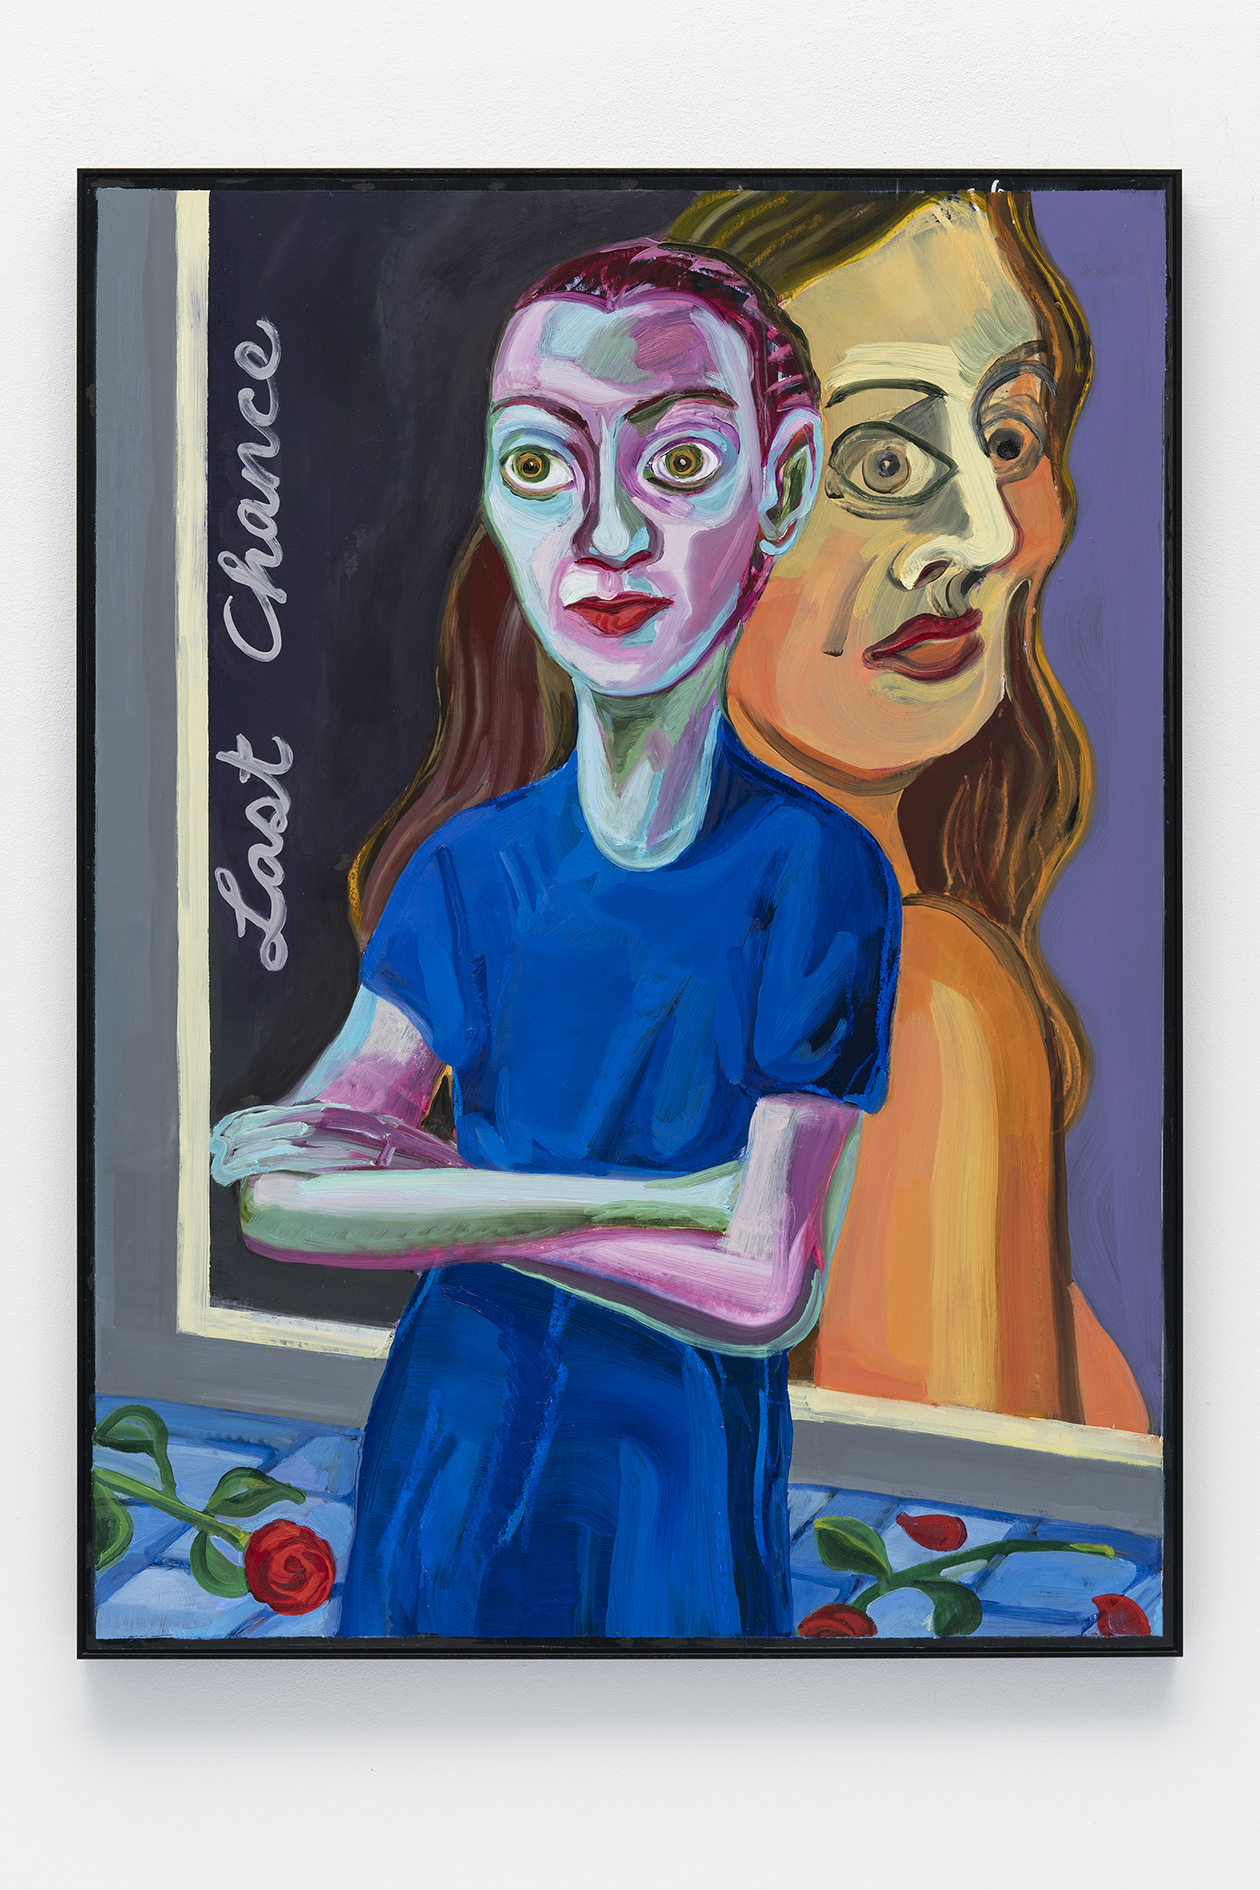 Olivia Parkes, Last Chance, 2021 – Oil on rag board, 103.5 x 76.8 x 2.5 cm